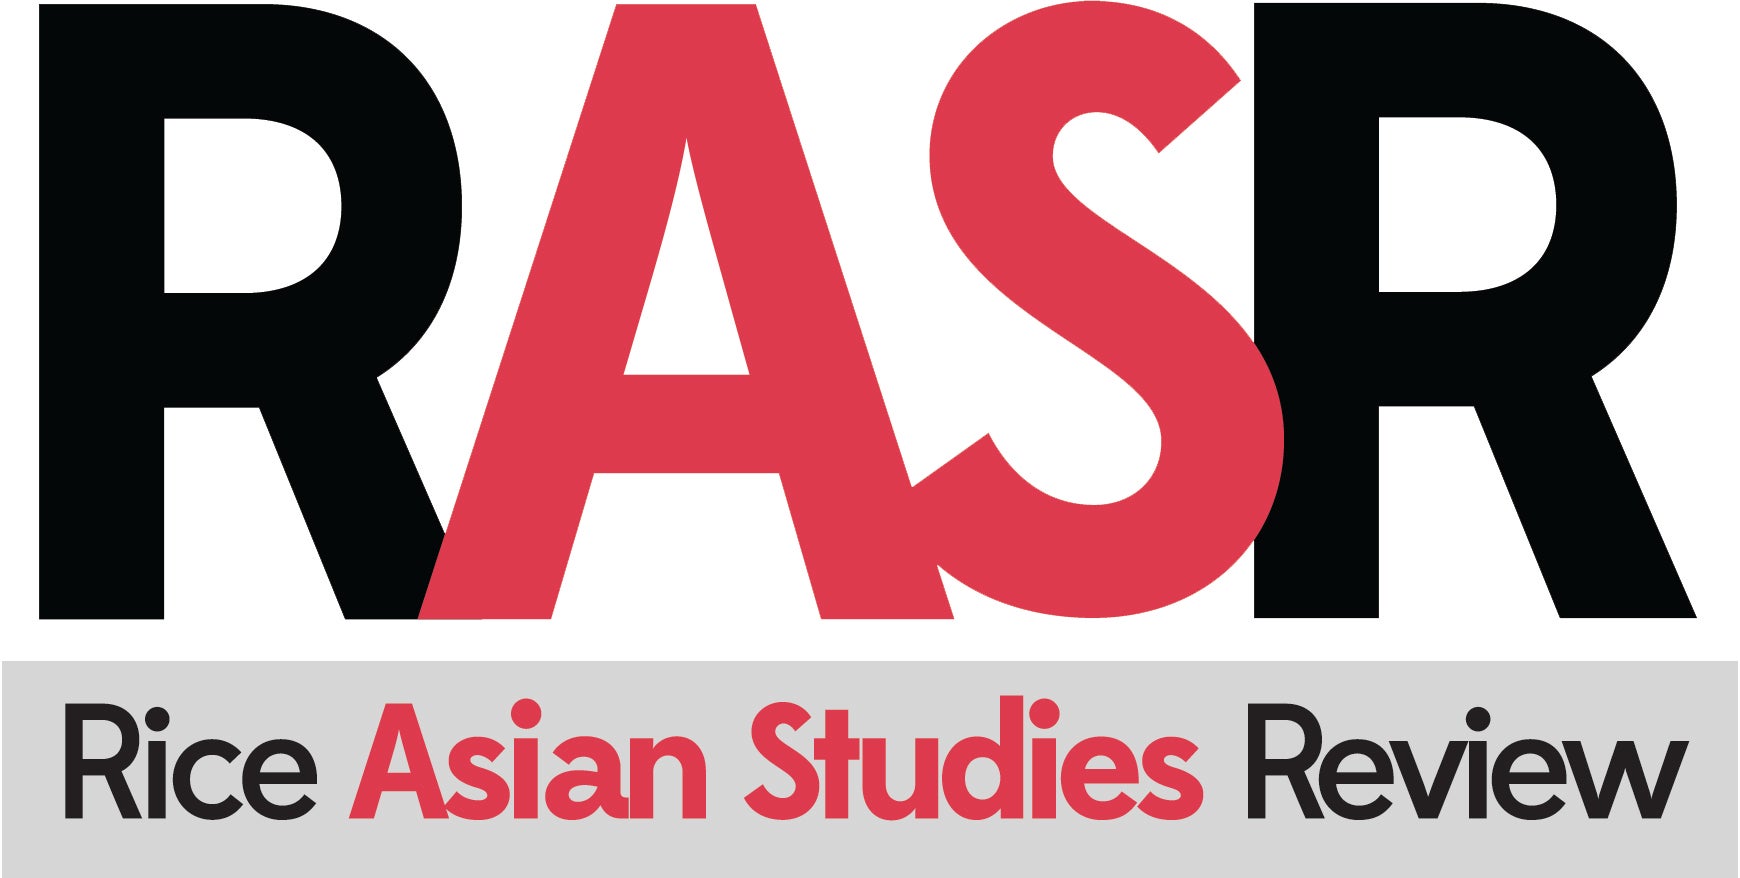 Rice Asian Studies Review logo